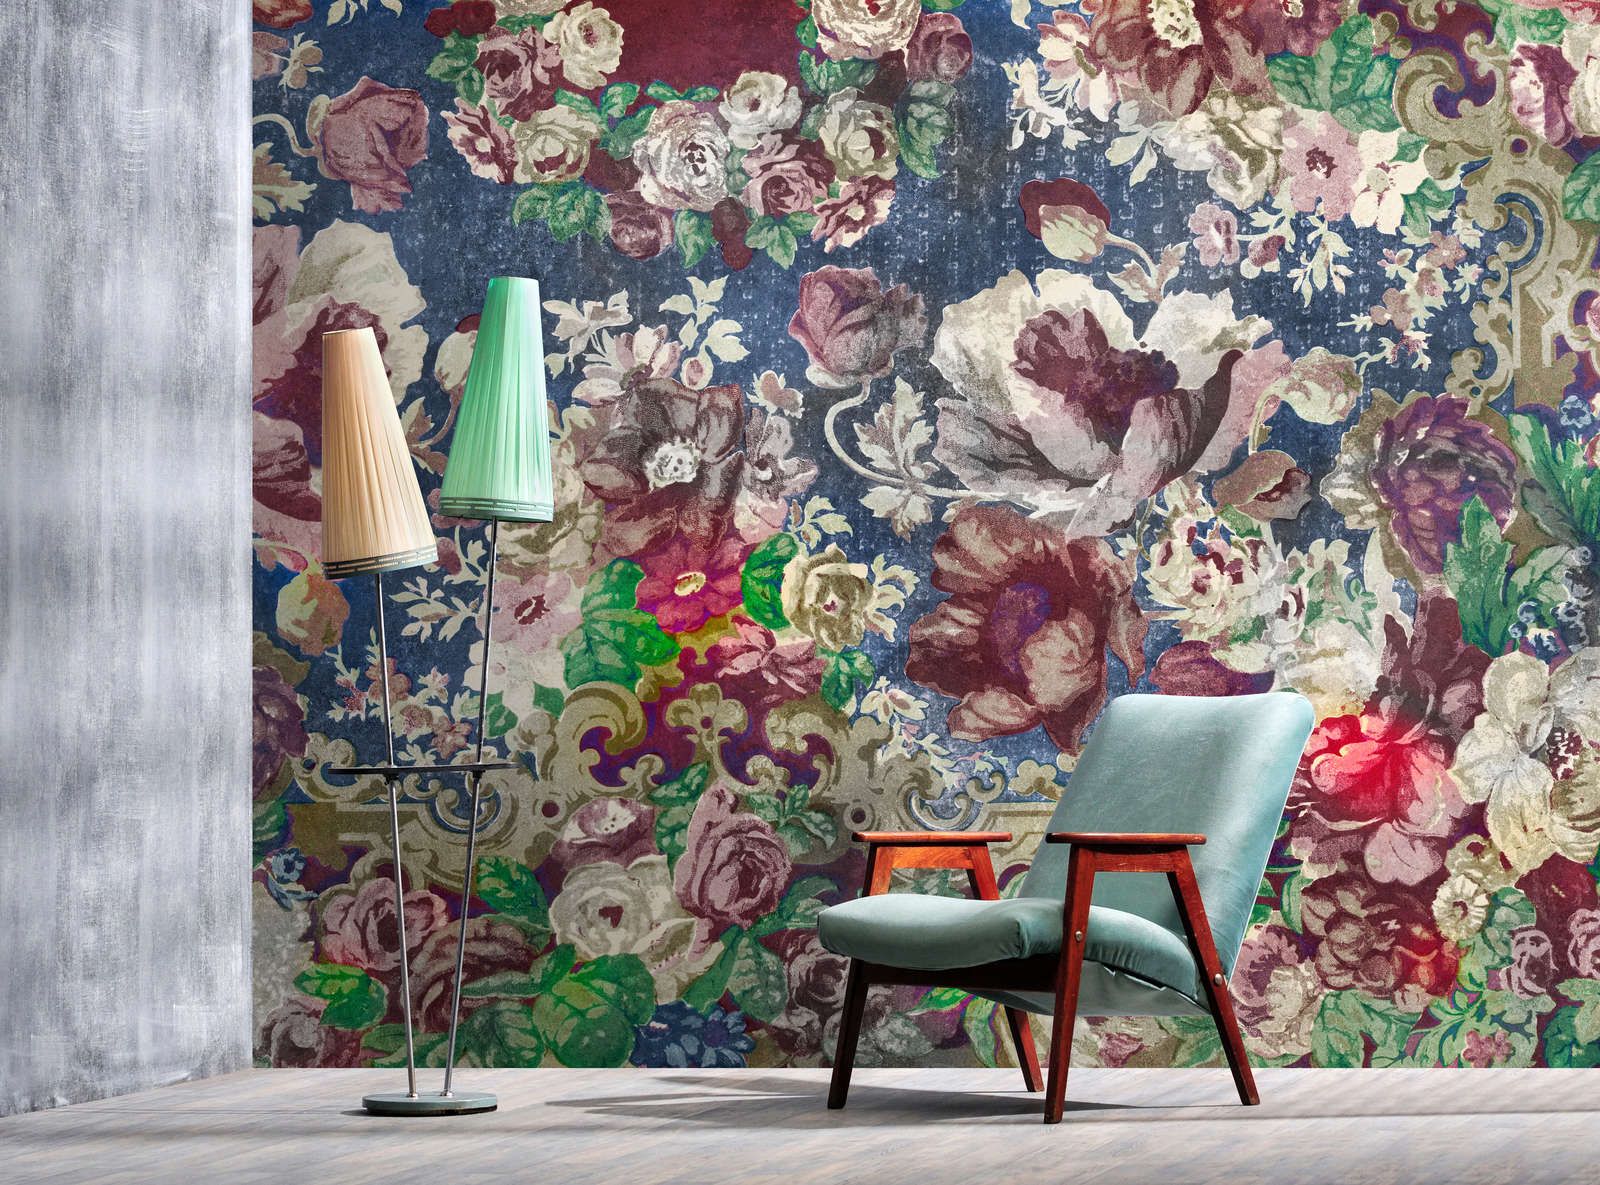             Digital behang »carmente 2« - Klassiek bloemenpatroon voor vintage pleisterstructuur - Bont | Licht structuurvlies
        